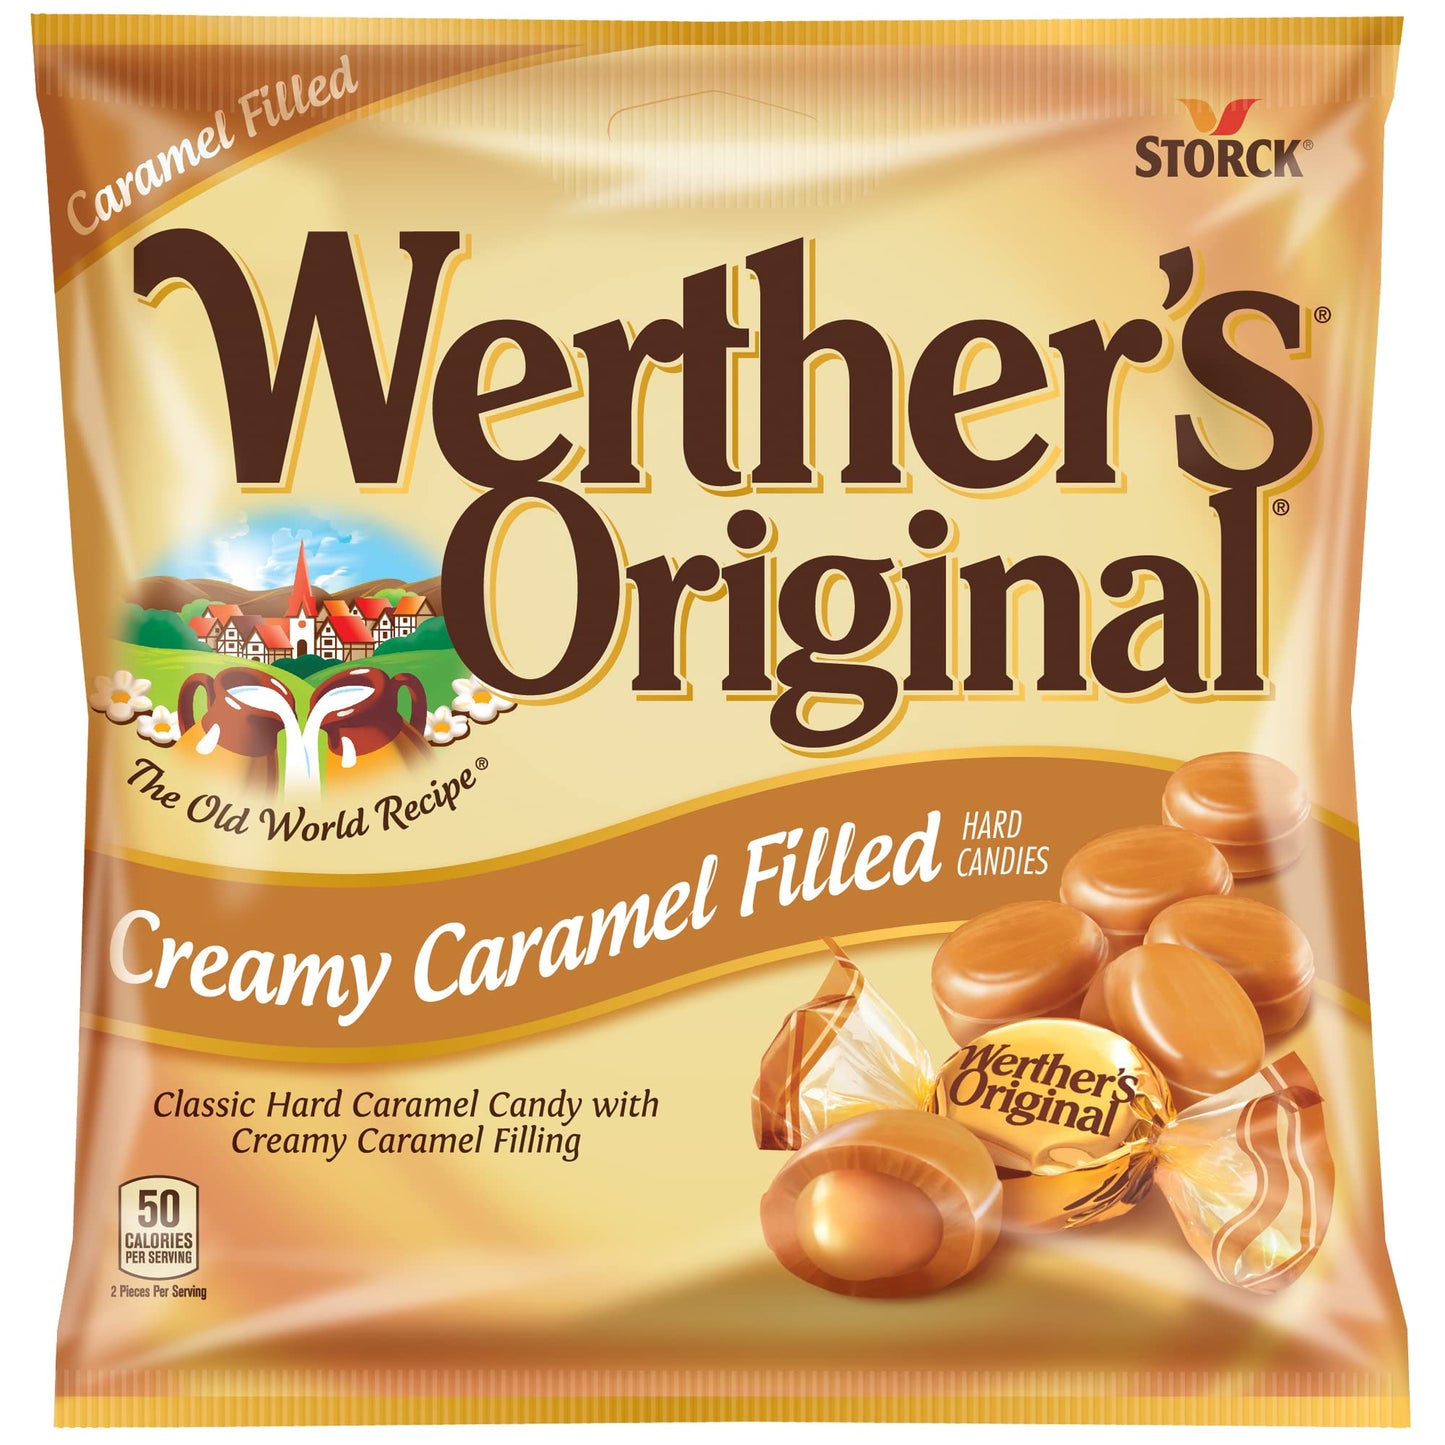 Werther’s Original Creamy Caramel Filled 2.65oz